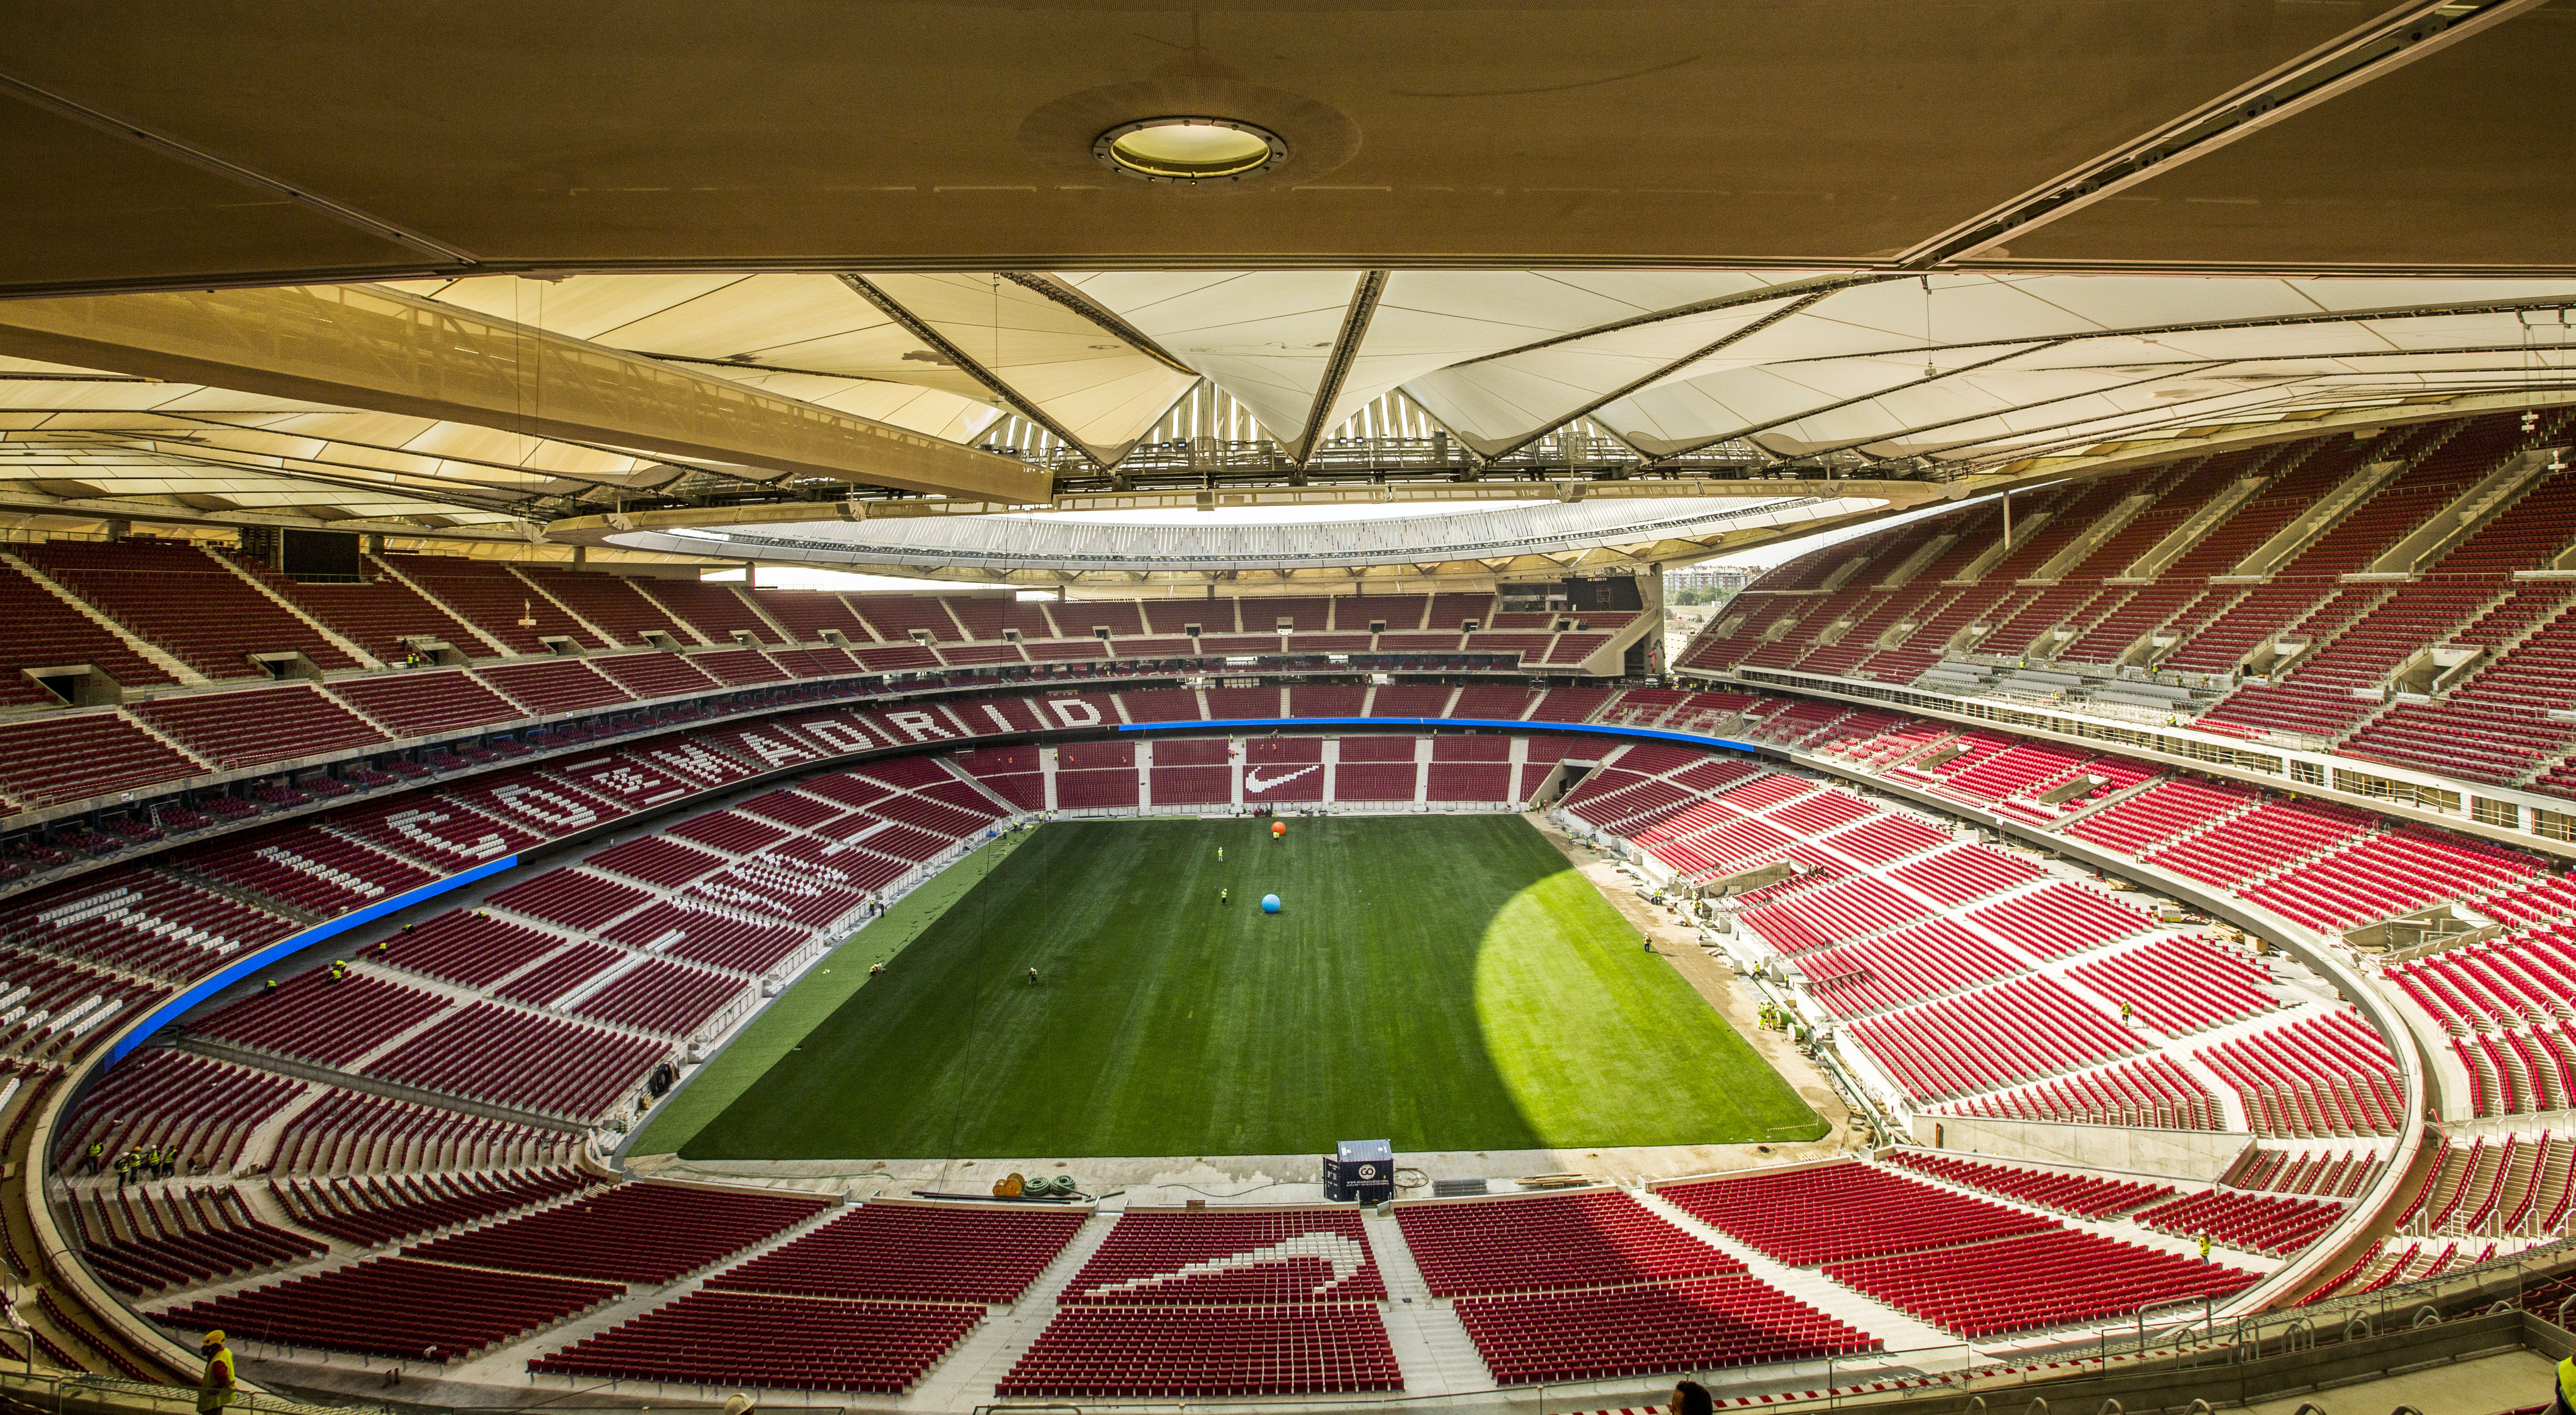 
			
			Wanda Metropolitano Stadium
		